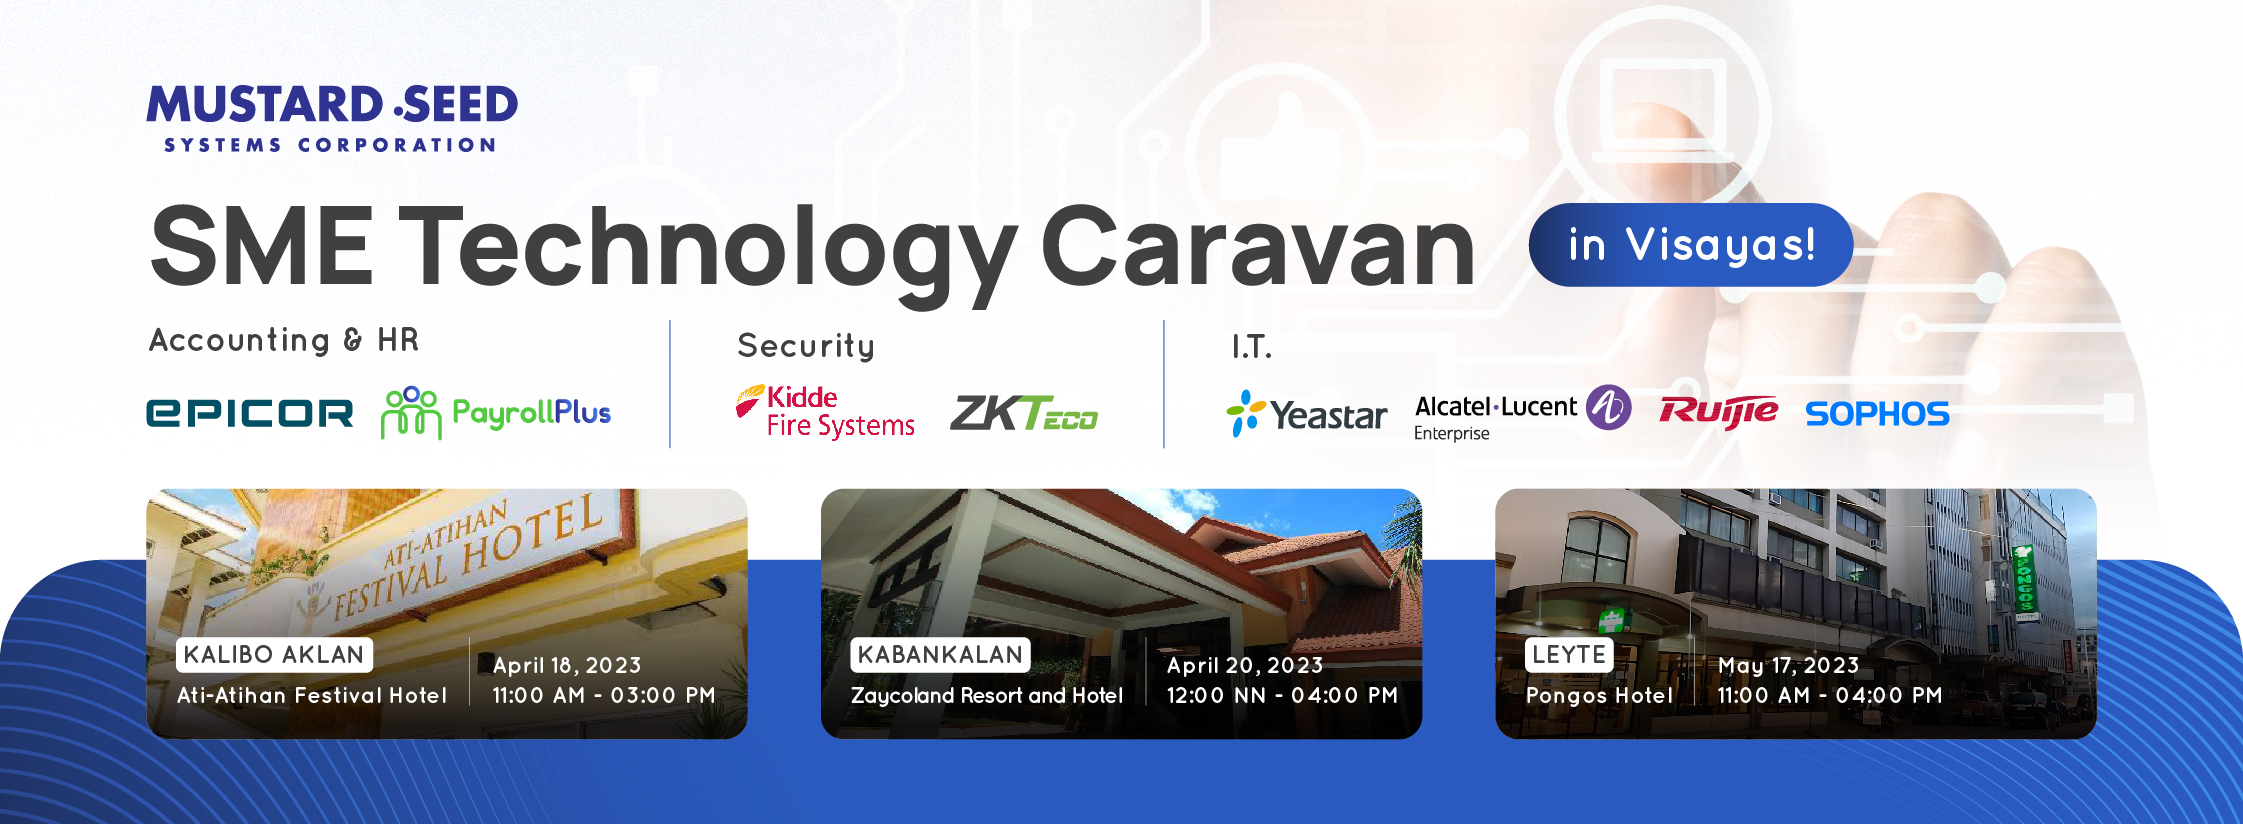 SME Technology Caravan OW Banner Summary 